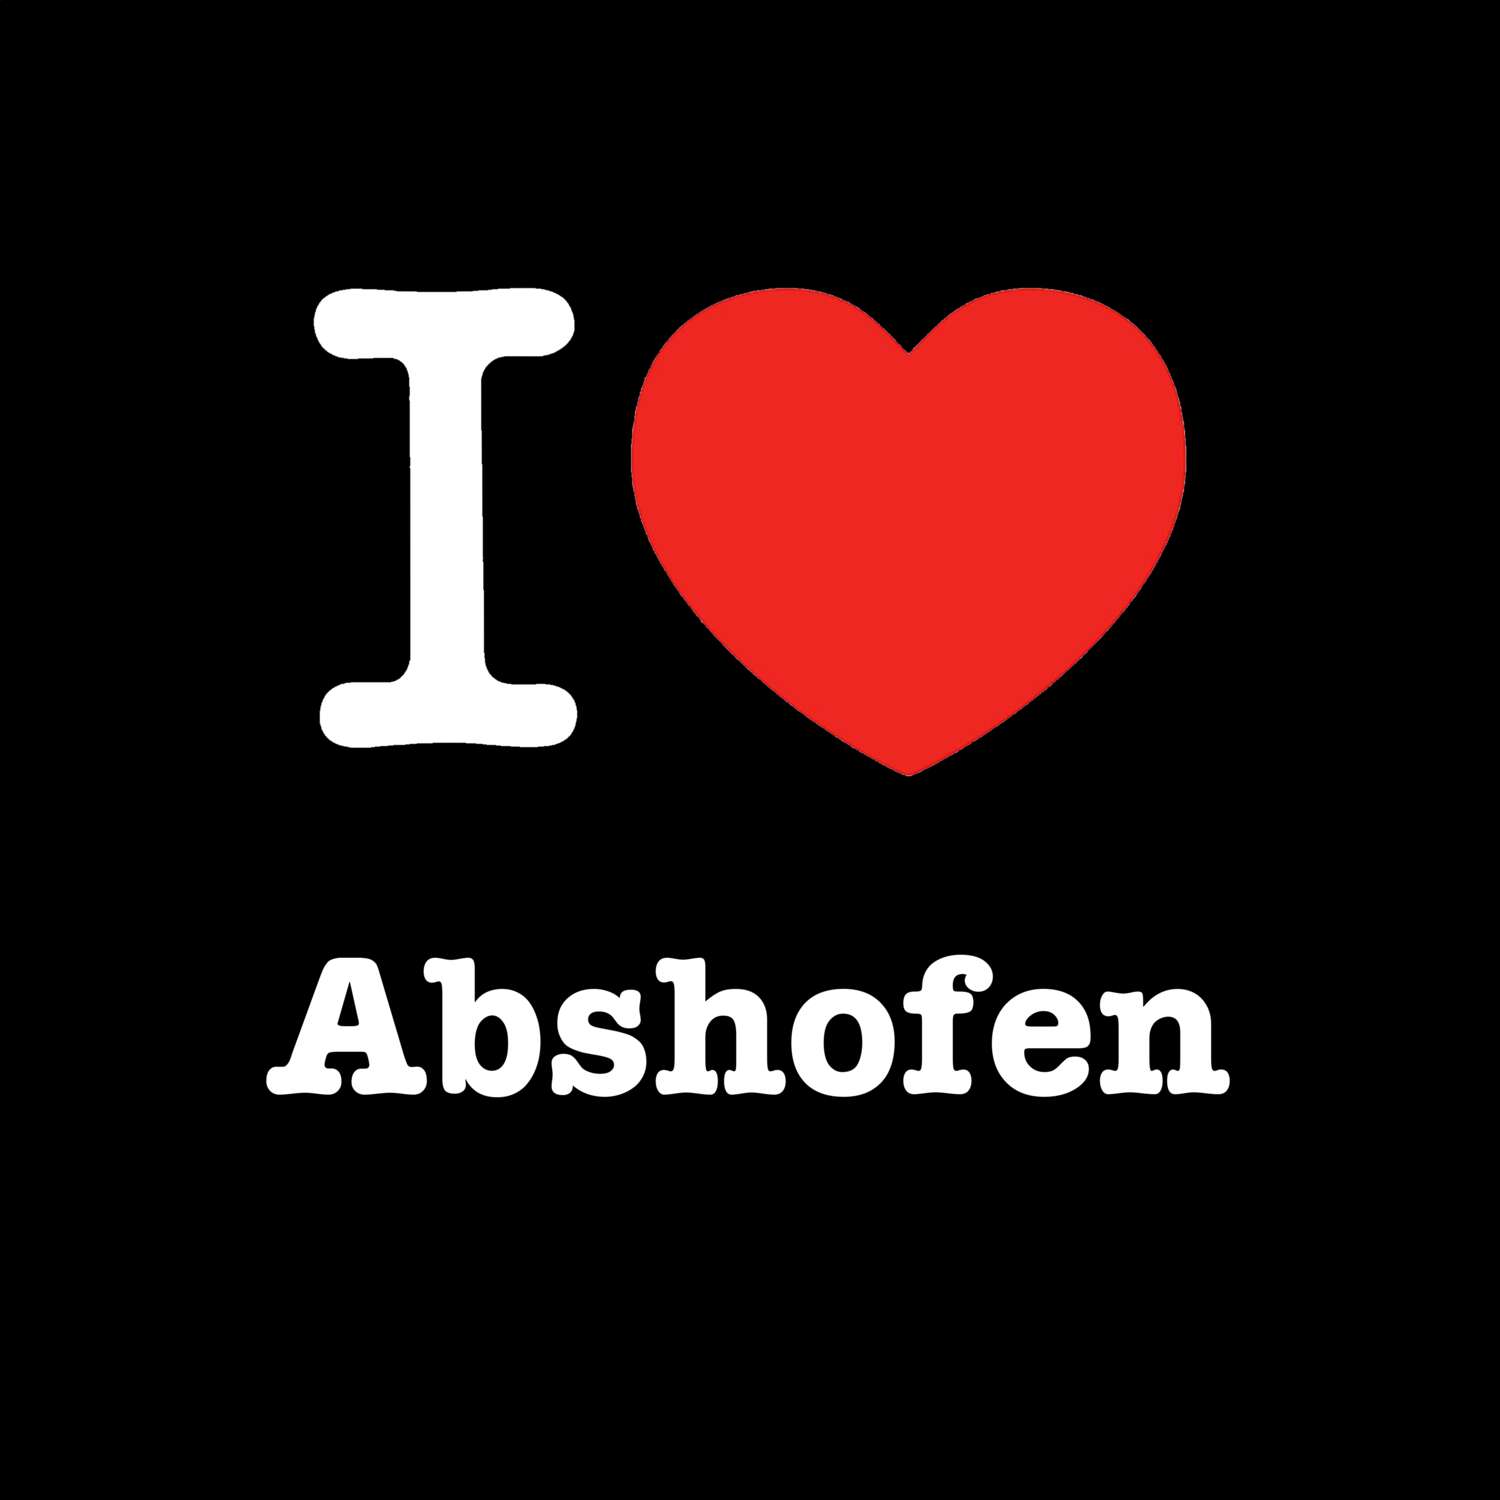 Abshofen T-Shirt »I love«